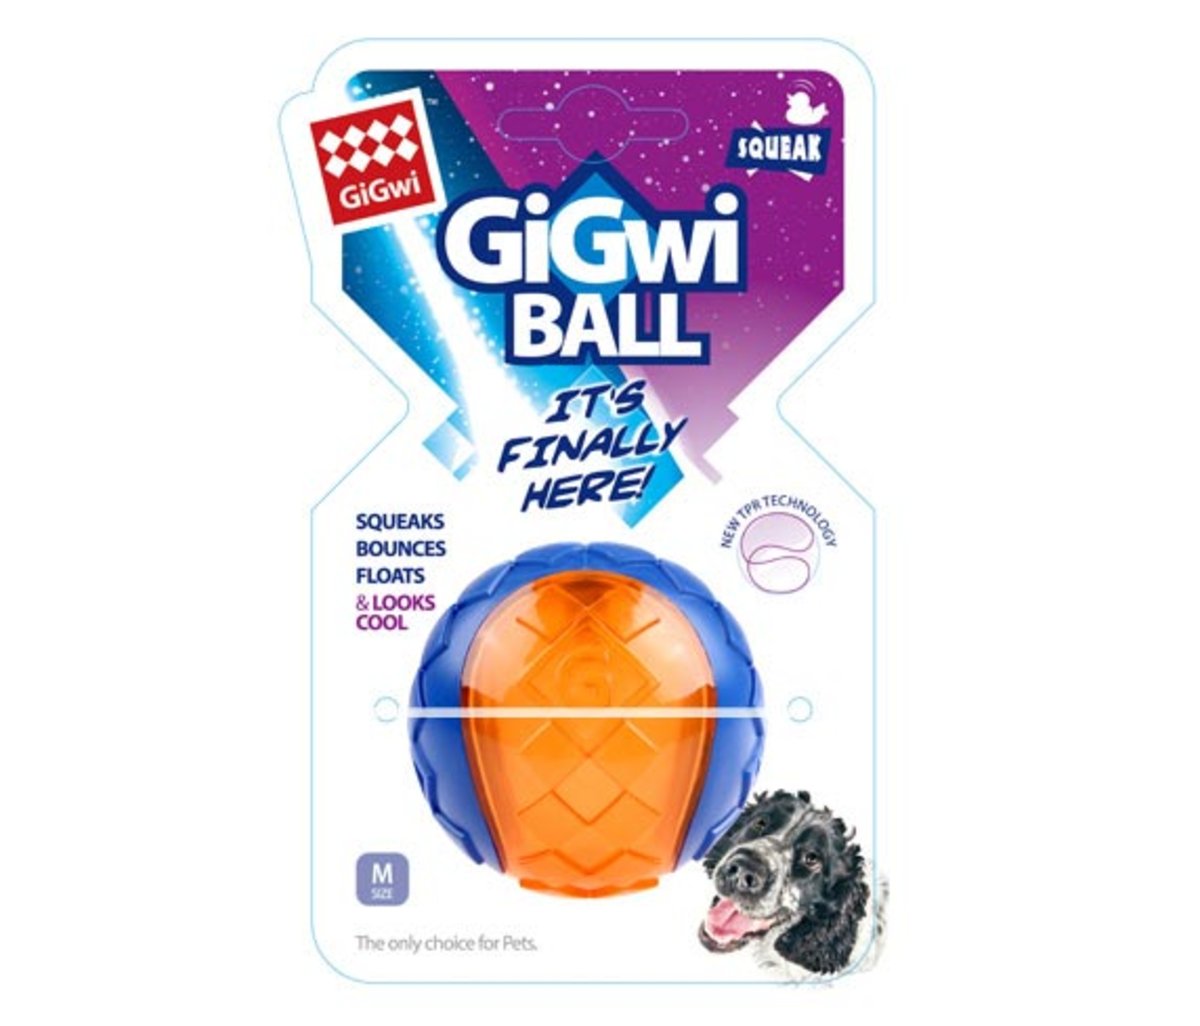 gigwi ball